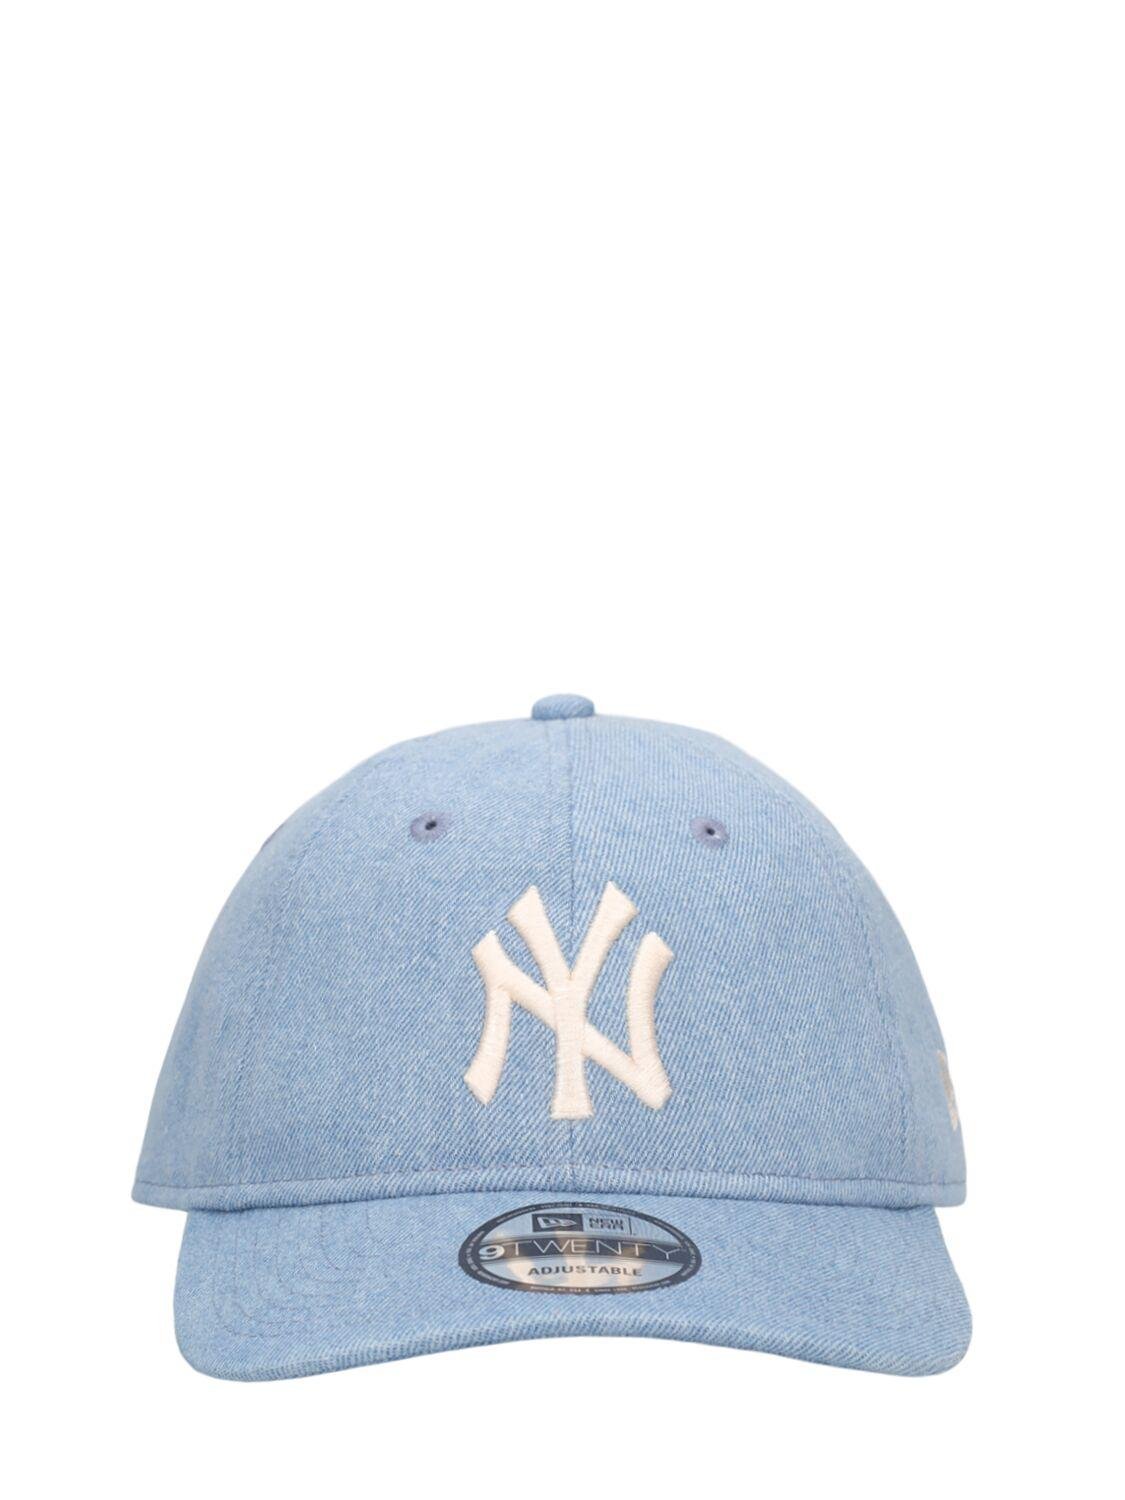 Washed Denim New York Yankees Cap by NEW ERA